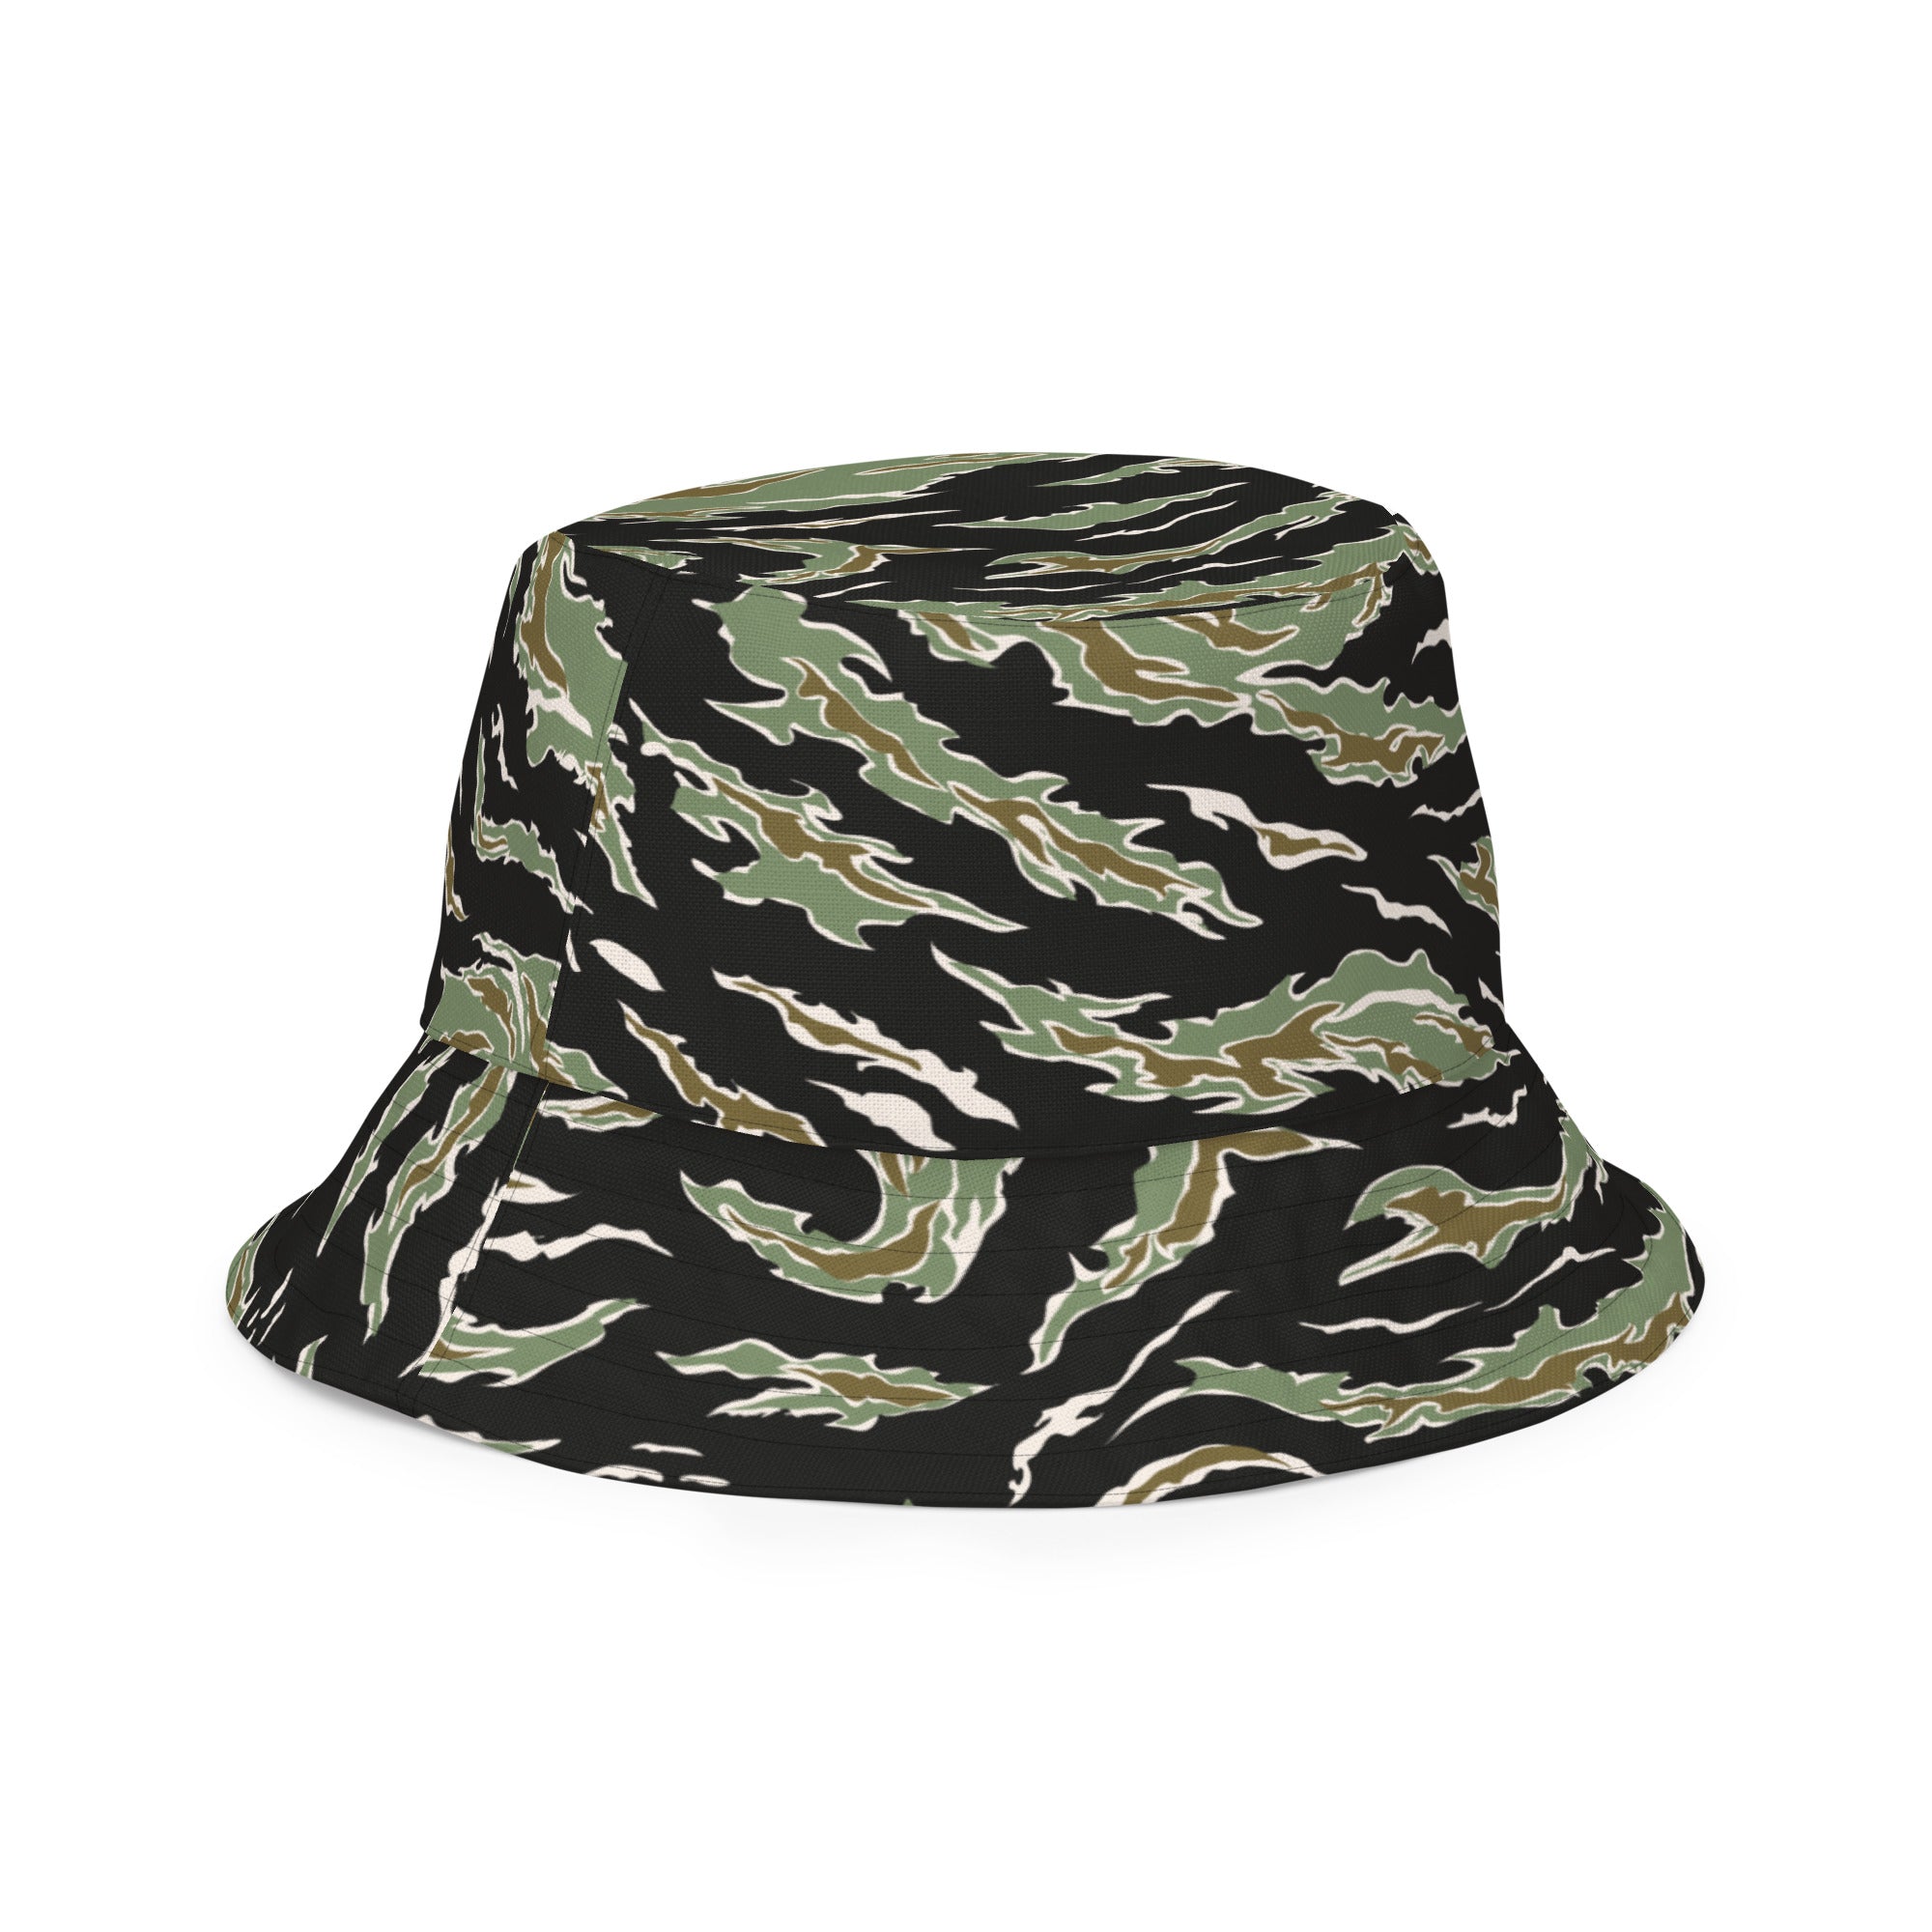 Tiger Stripe Jungle Camouflage Reversible bucket hat